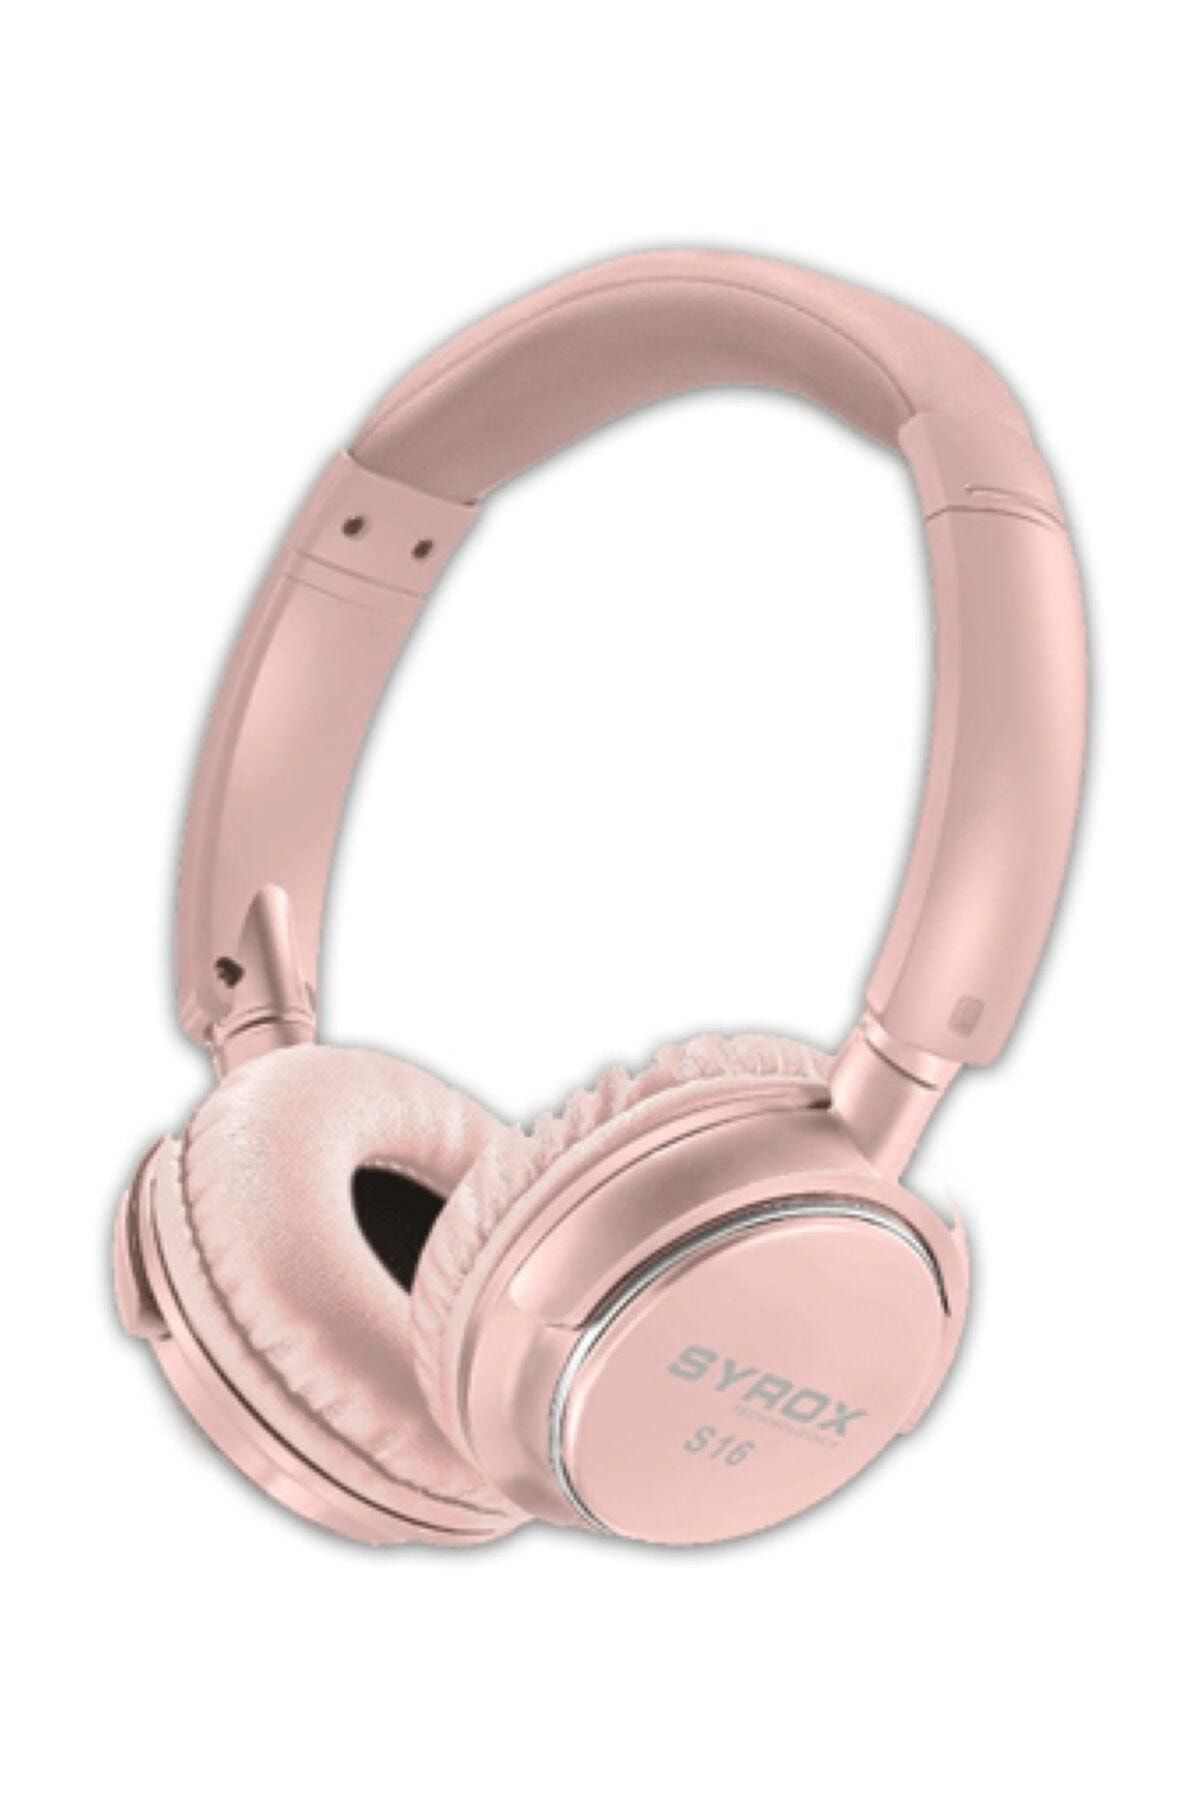 Syrox S16 Pembe Bluetooth Kulak Üstü Kablosuz Mikrofonlu Kulaklık